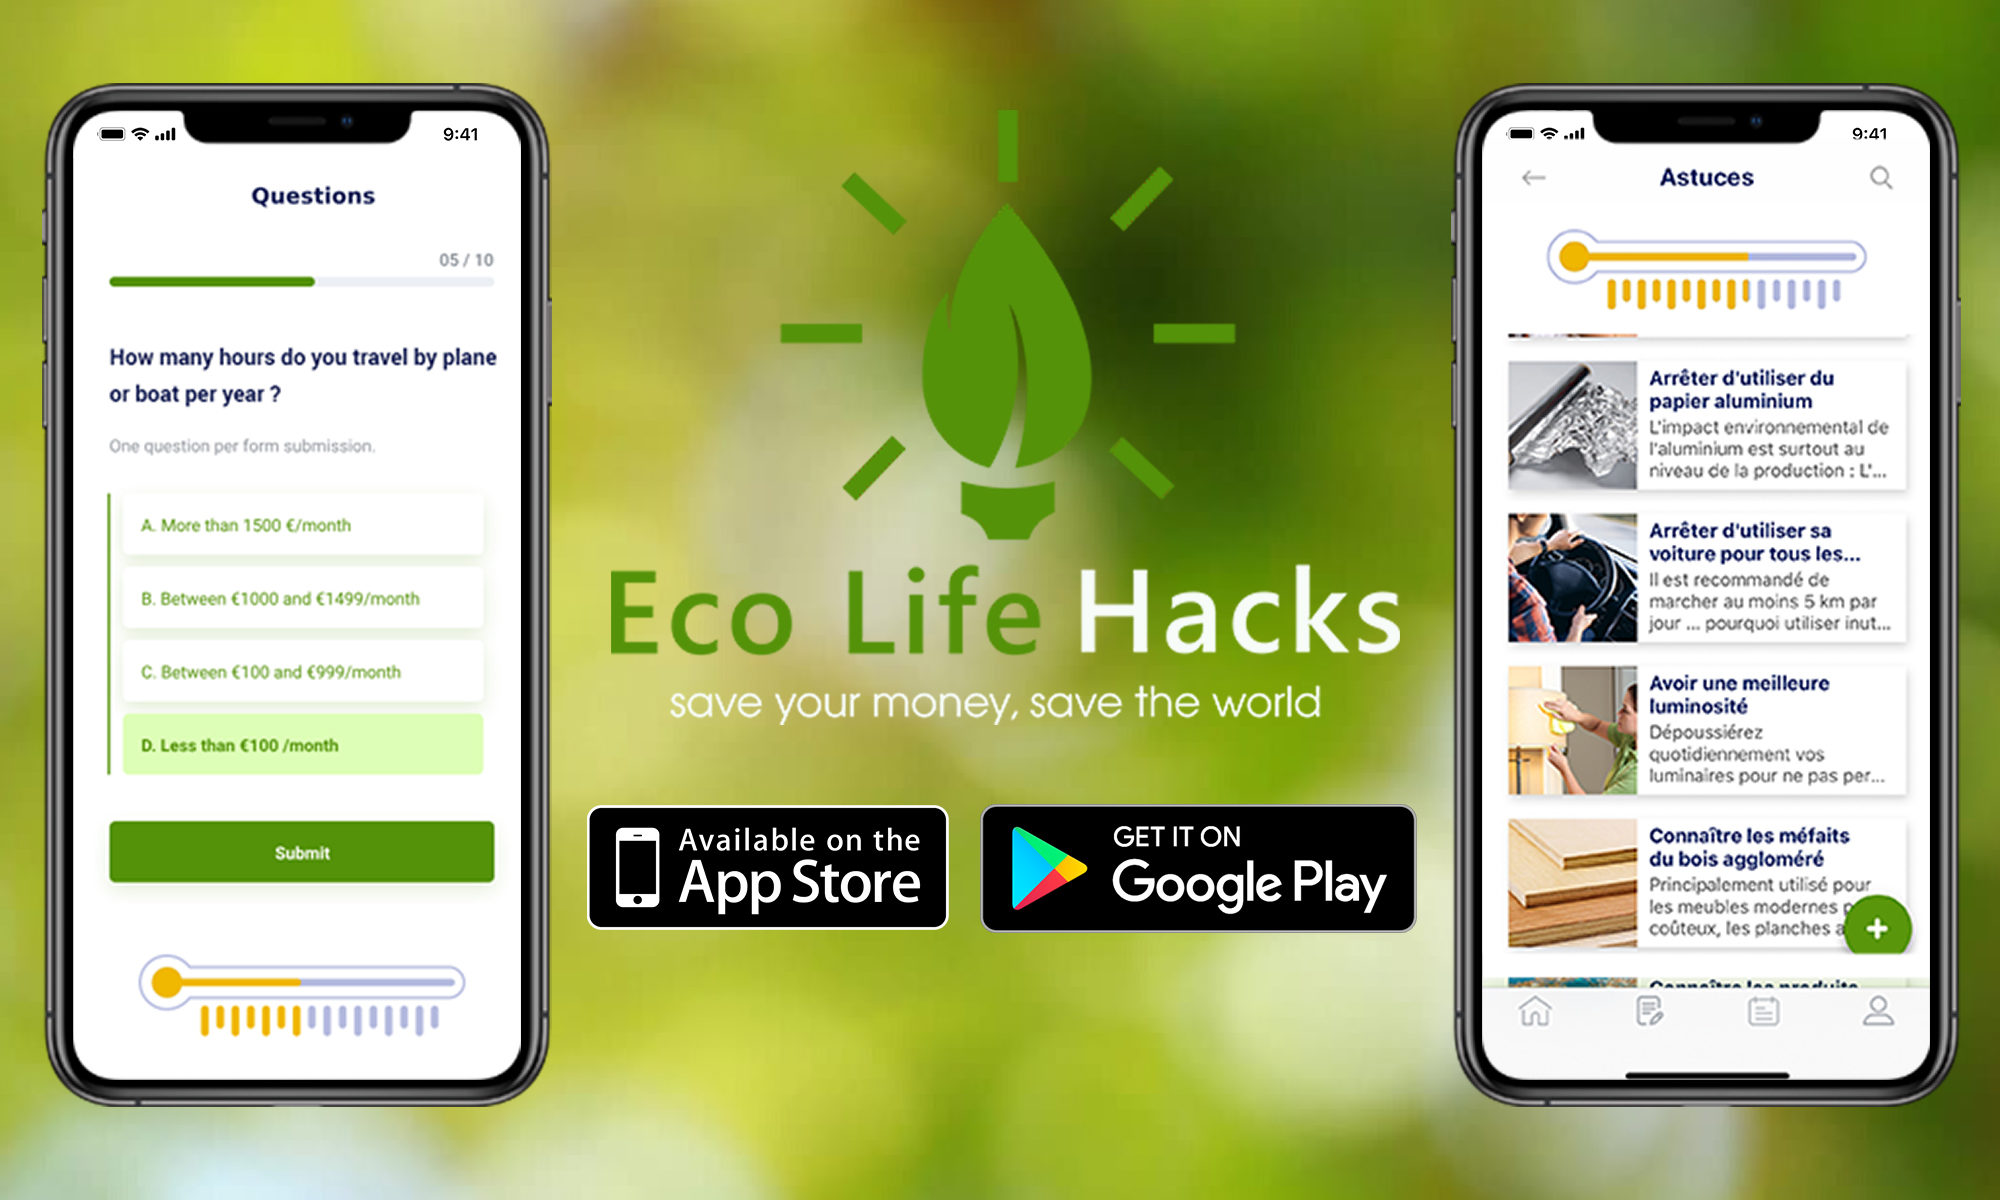 Eco Life Hacks